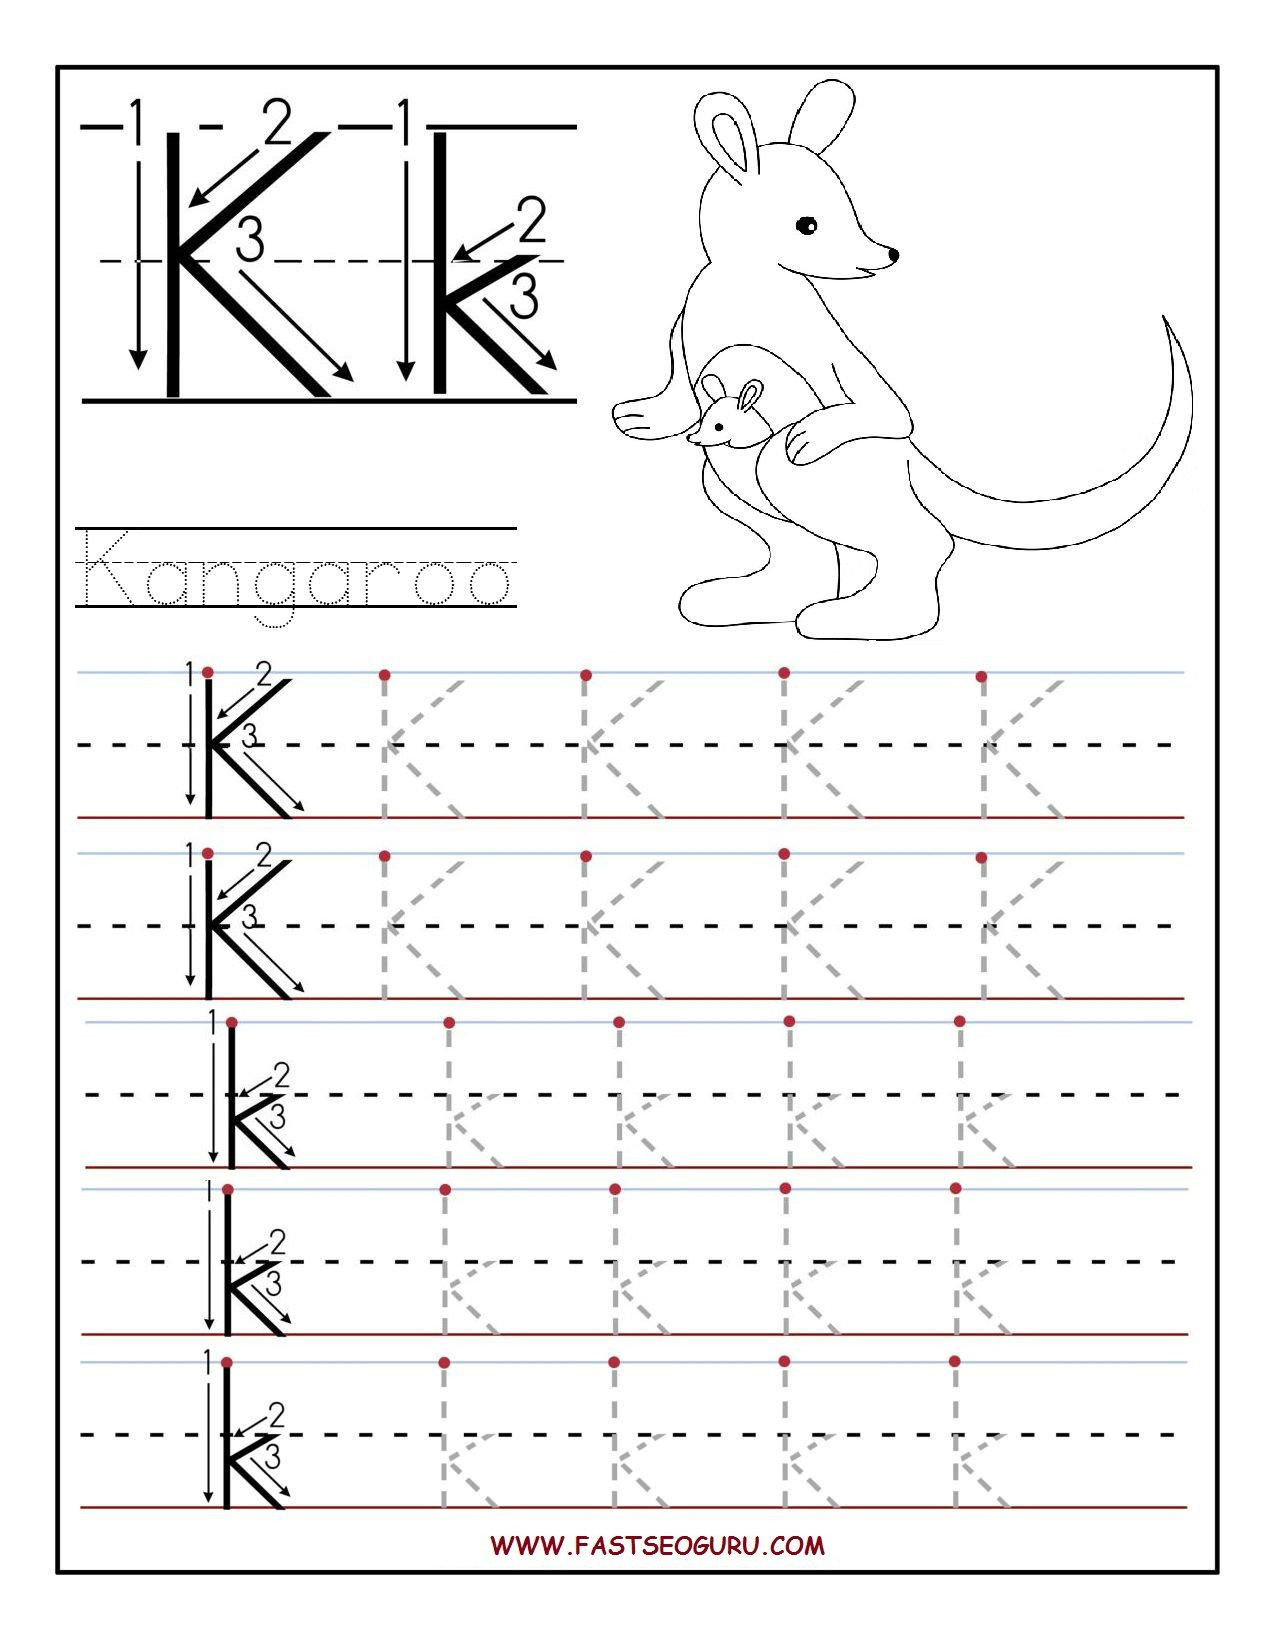 Letter K Tracing Worksheets Preschool Printable Letter K Tracing Worksheets for Preschool